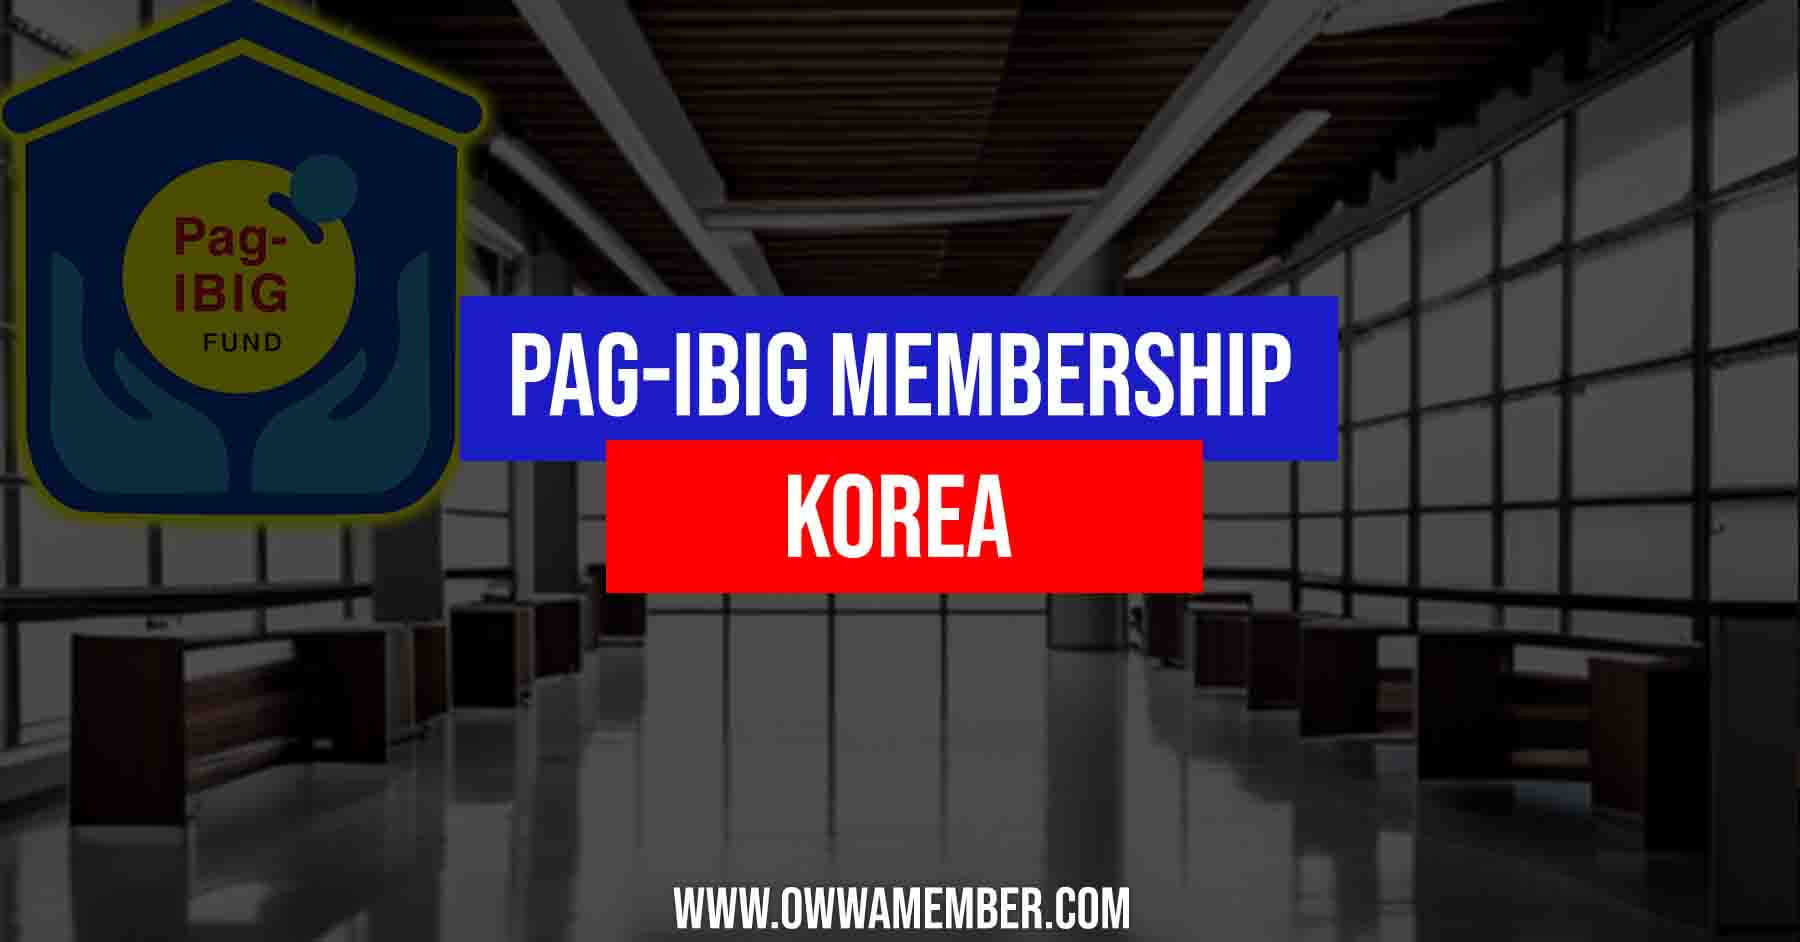 apply pagibig membership in korea